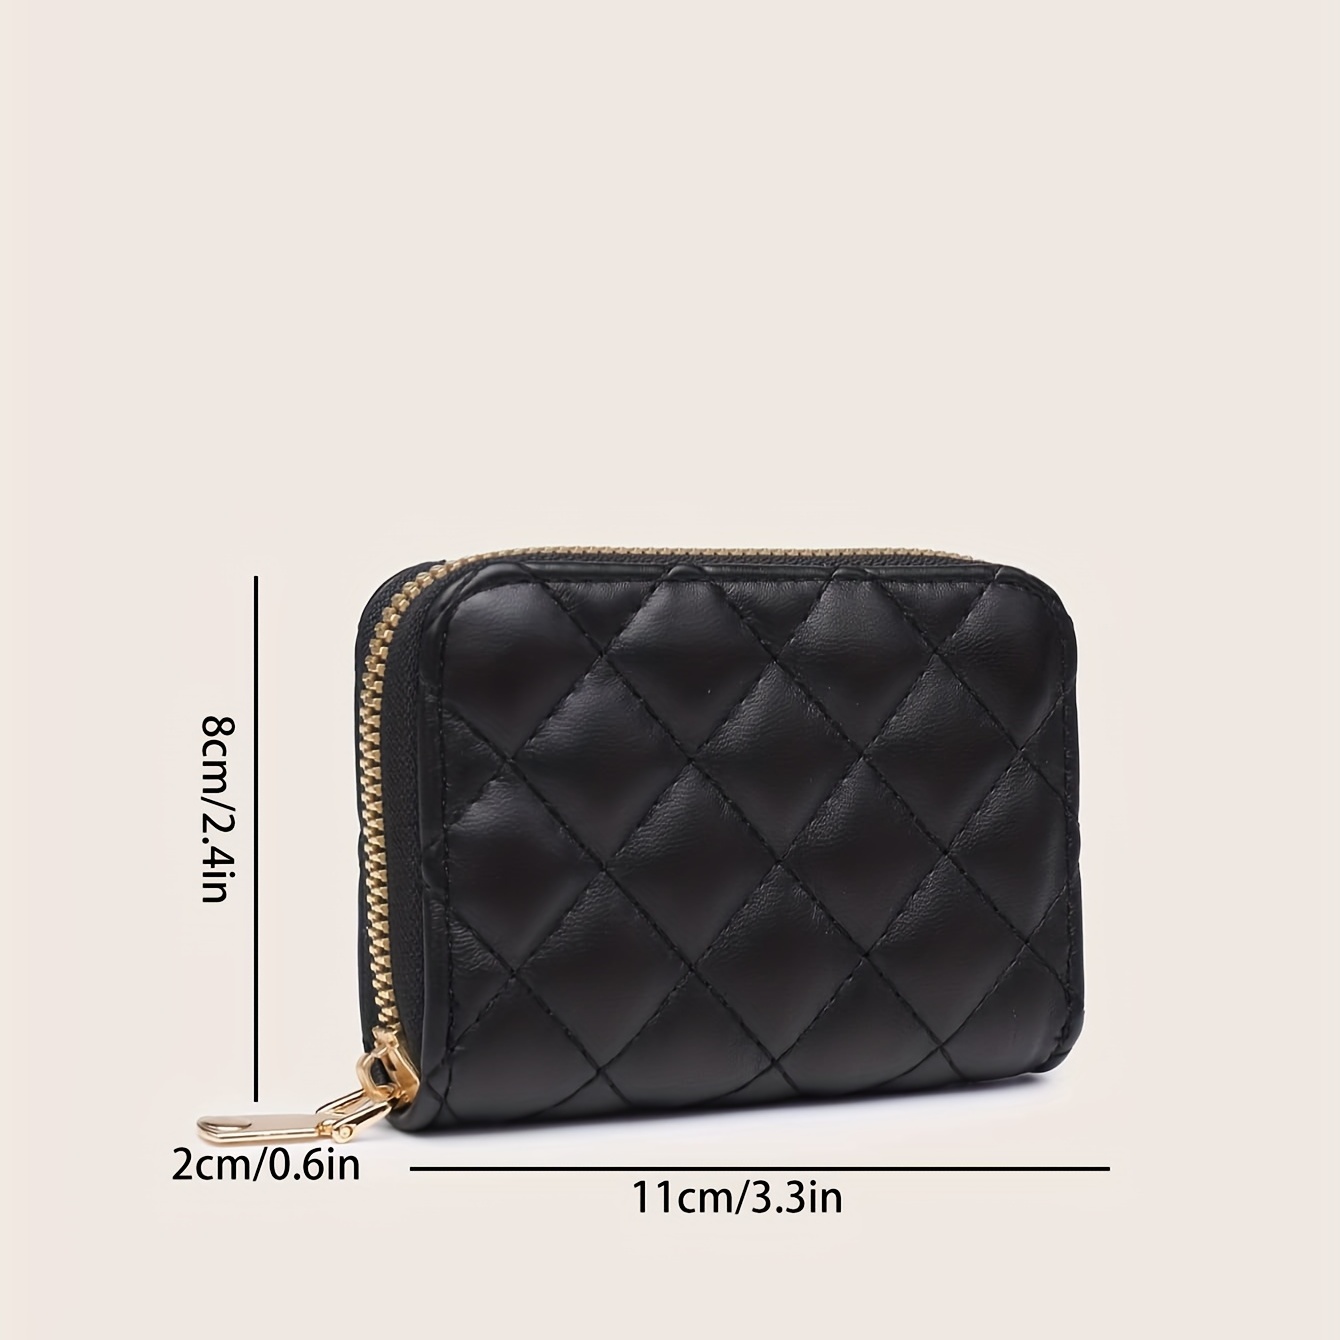  Ireolgiett Wallet Women Genuine Leather Card Holder